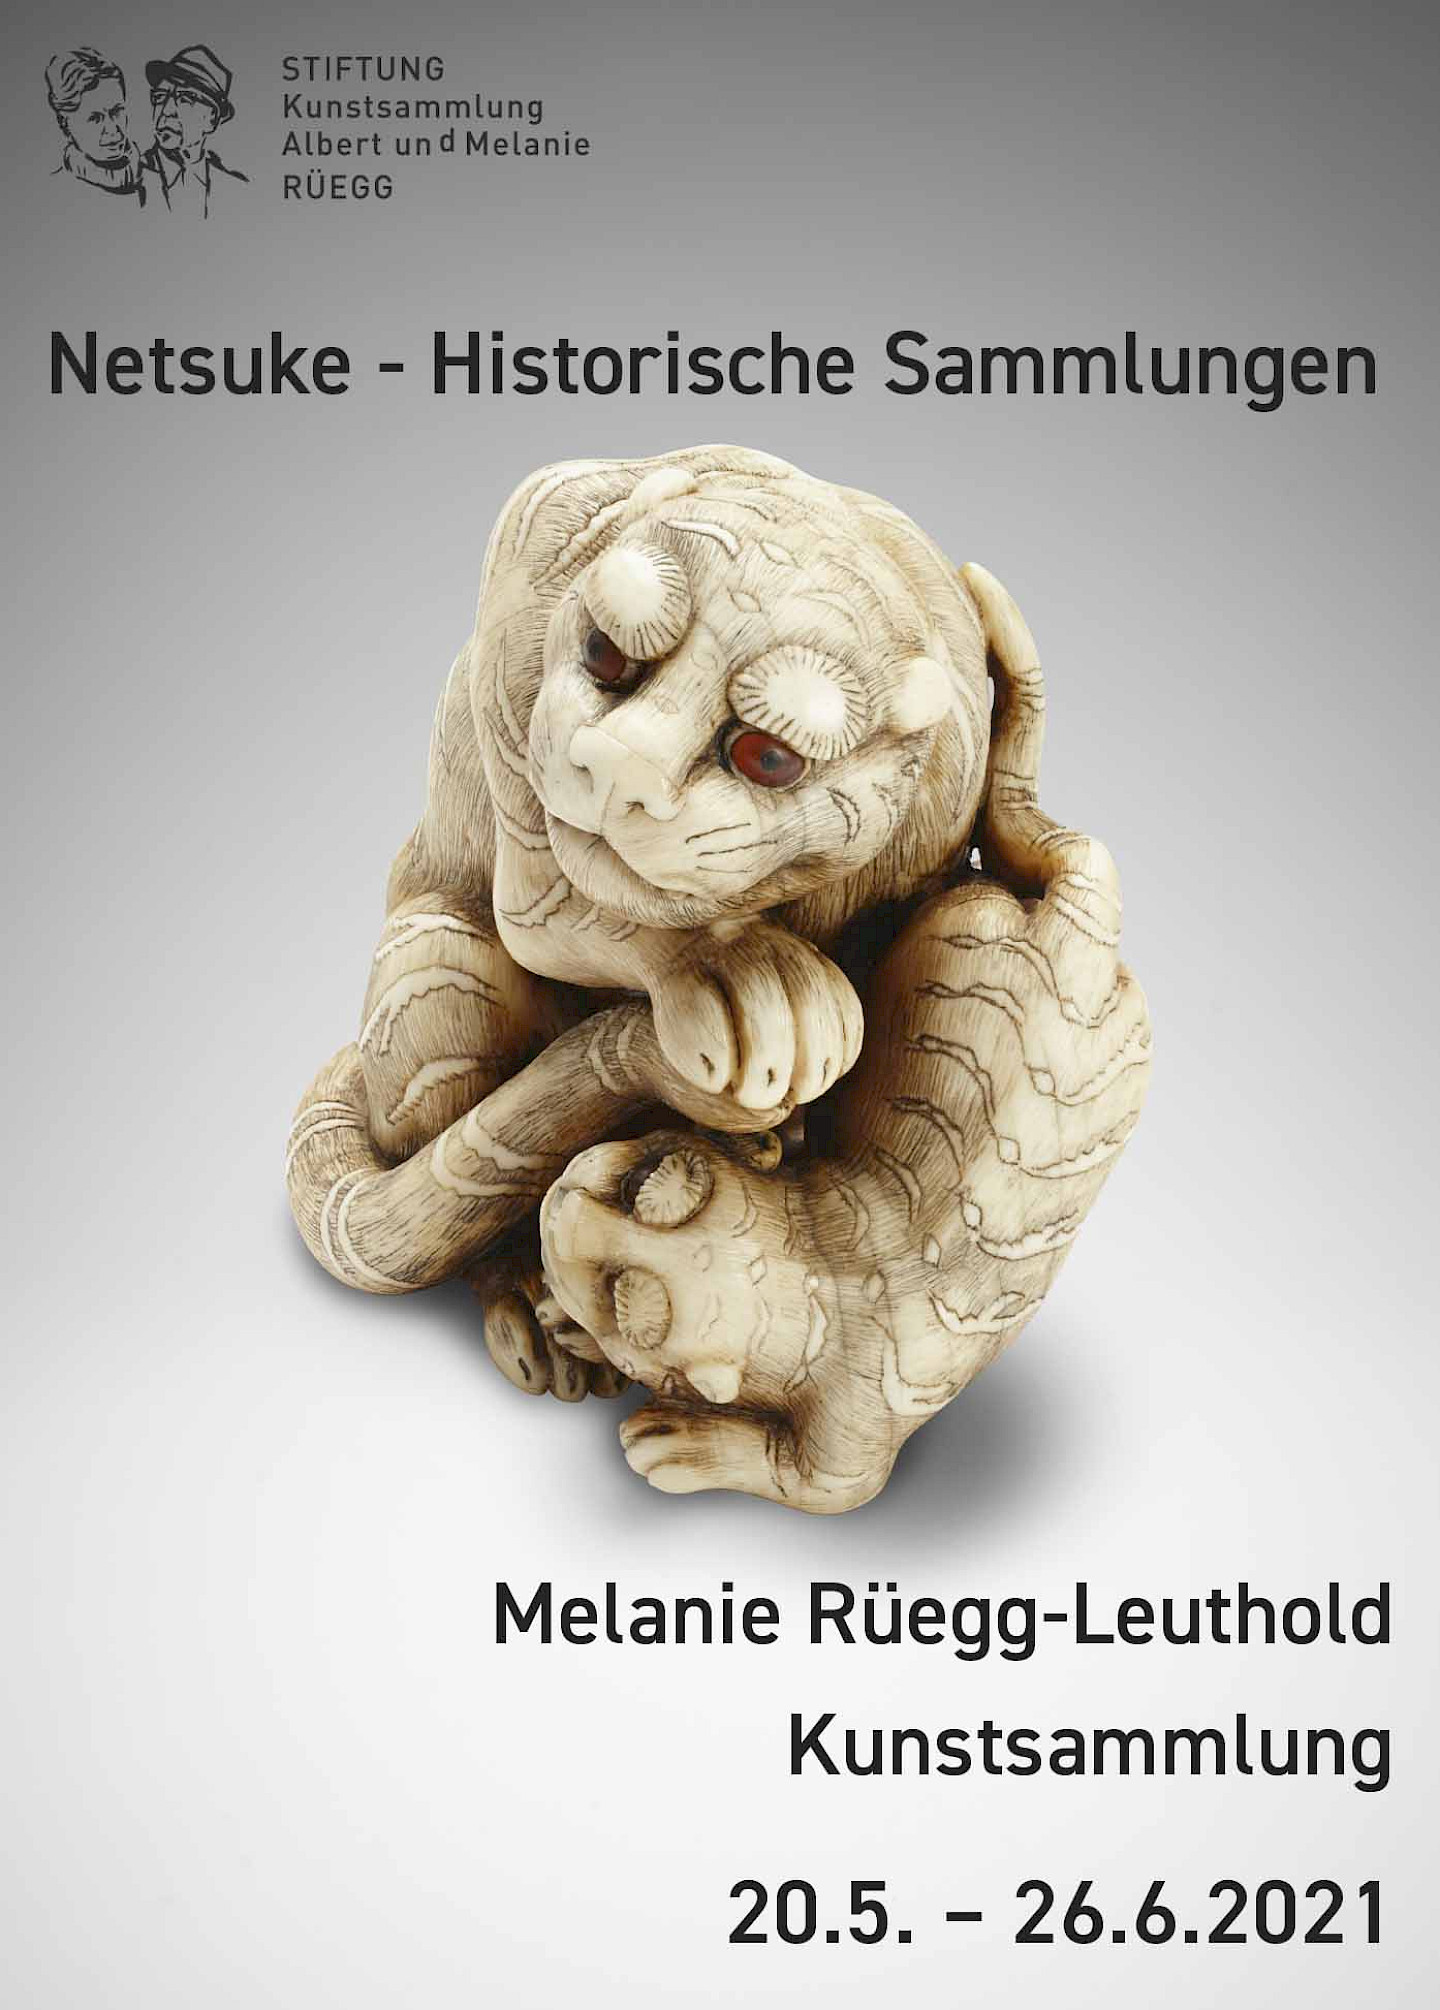 Doppelausstellung Melanie Rüegg-Leuthold - Kunstsammlung & Netsuke - Historische Sammlungen